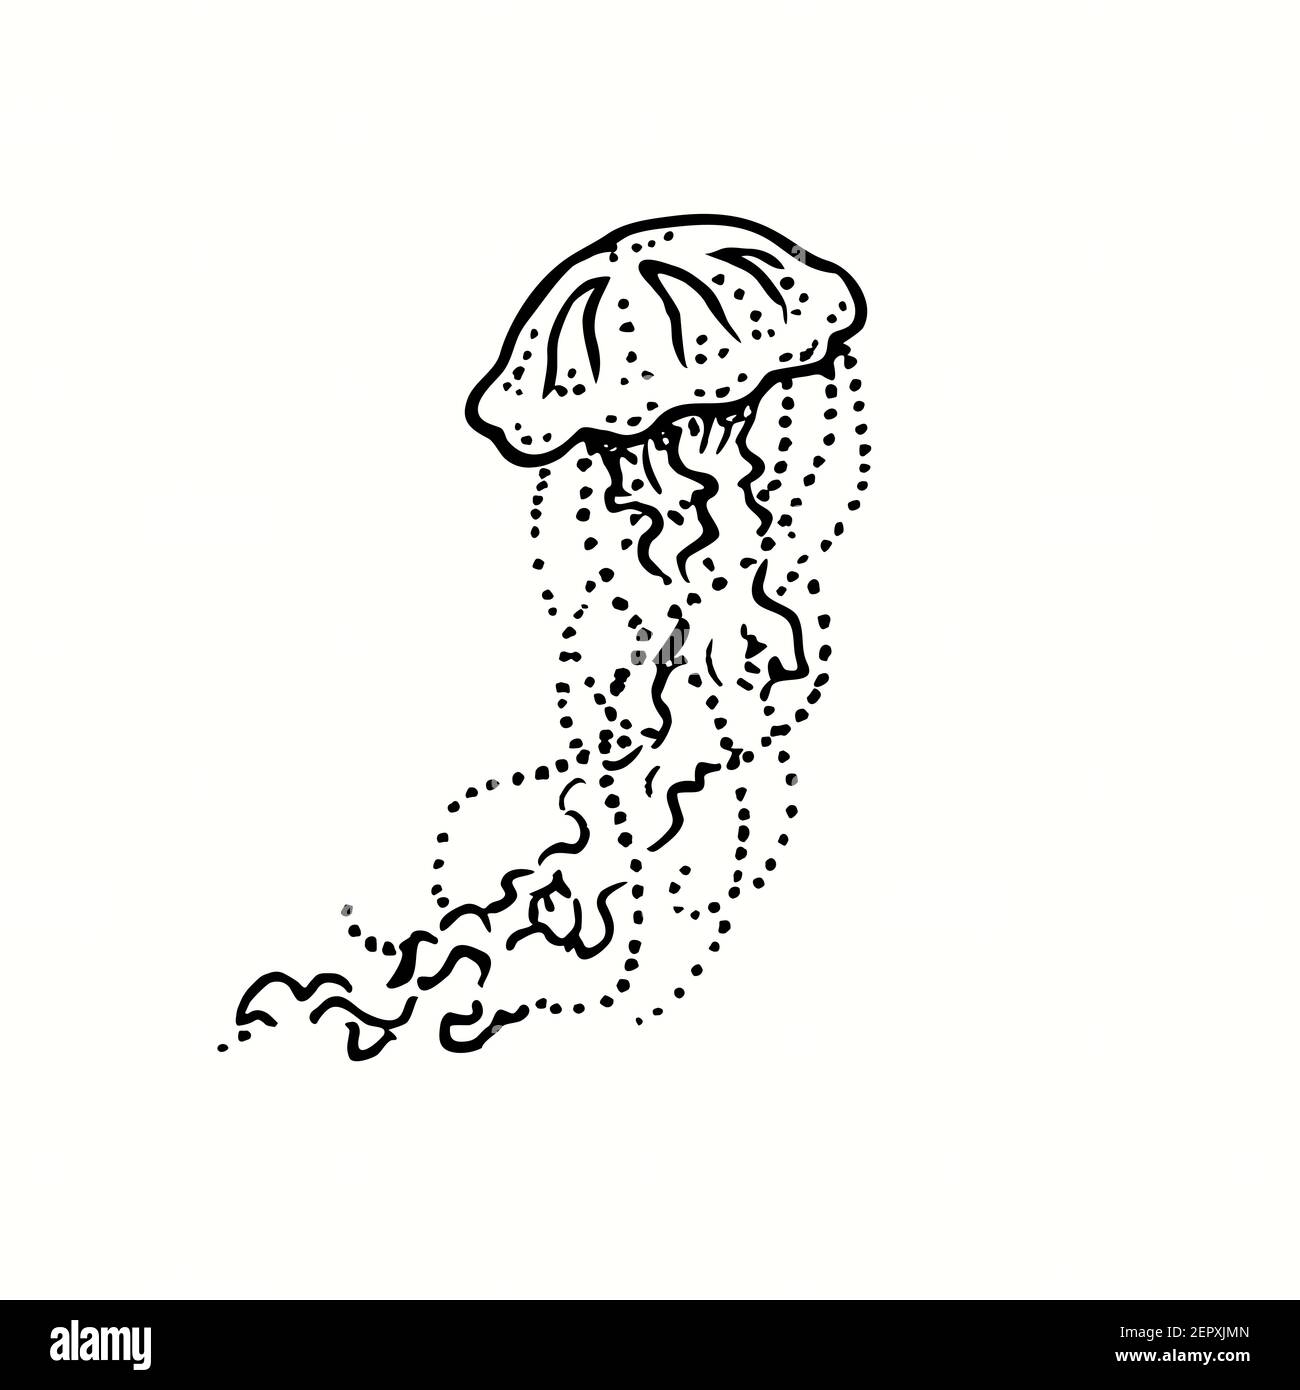 jellyfish drawing